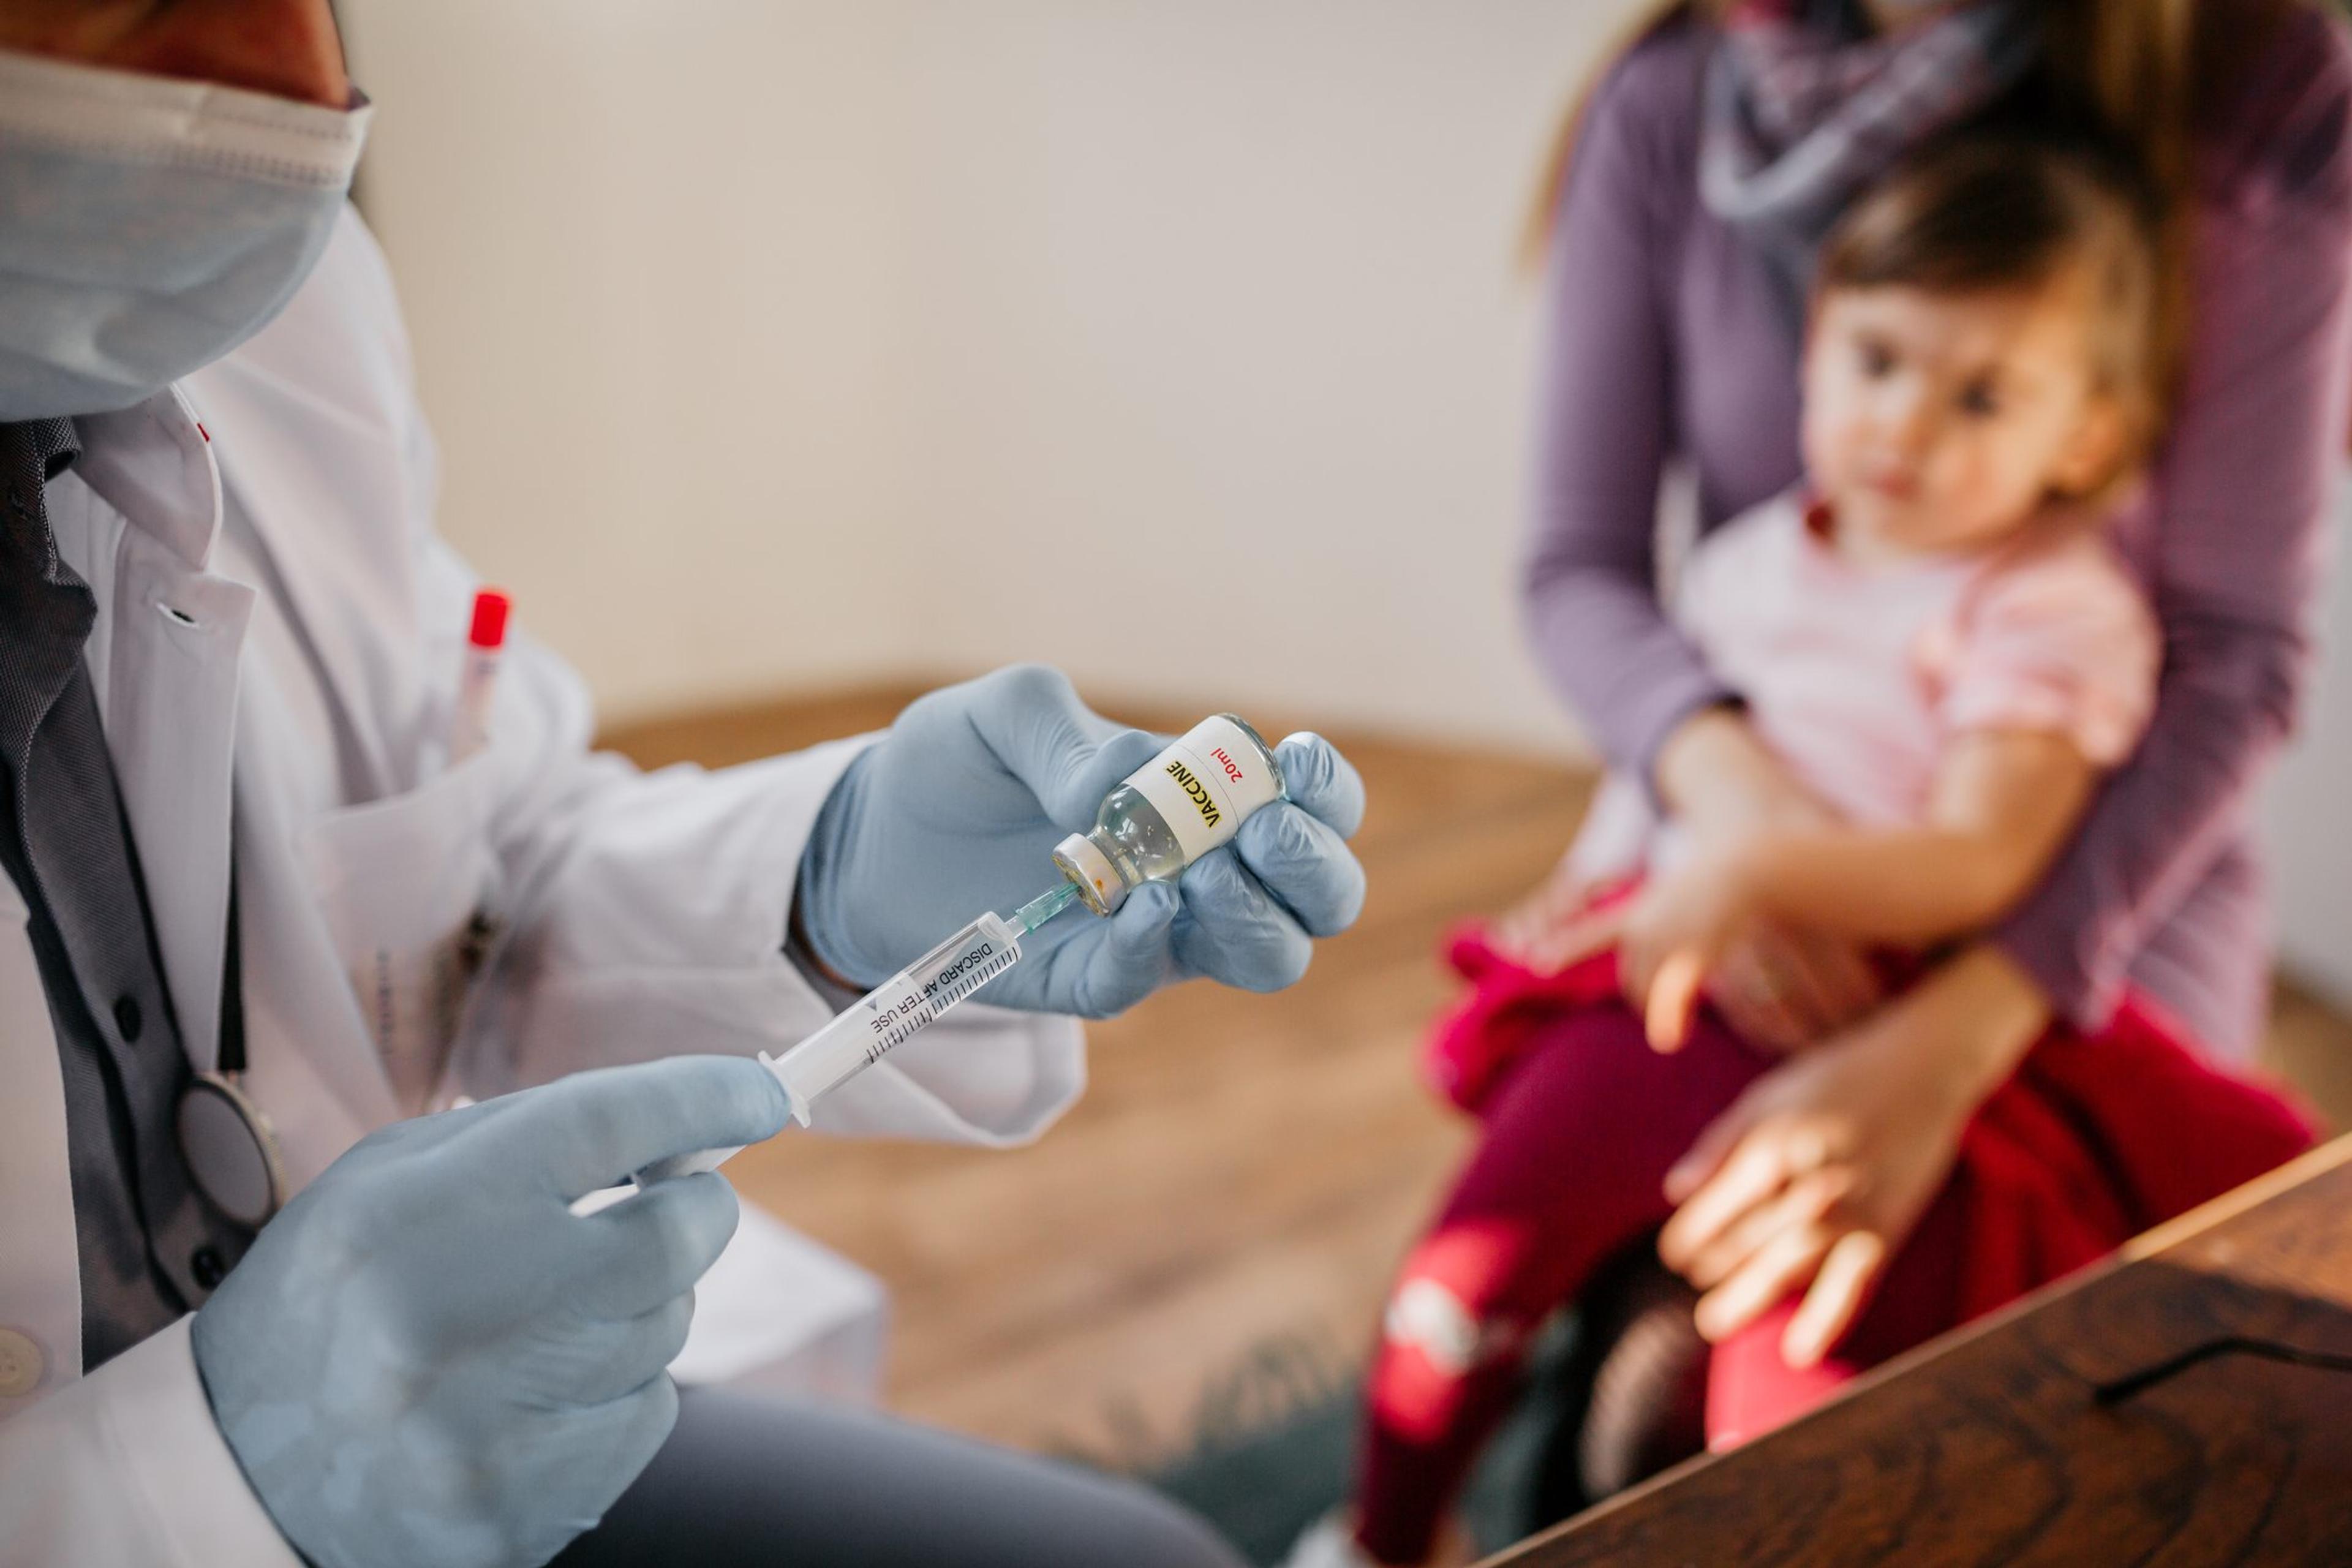 Health care provider prepares to give a COVID vaccine to a child under age 5